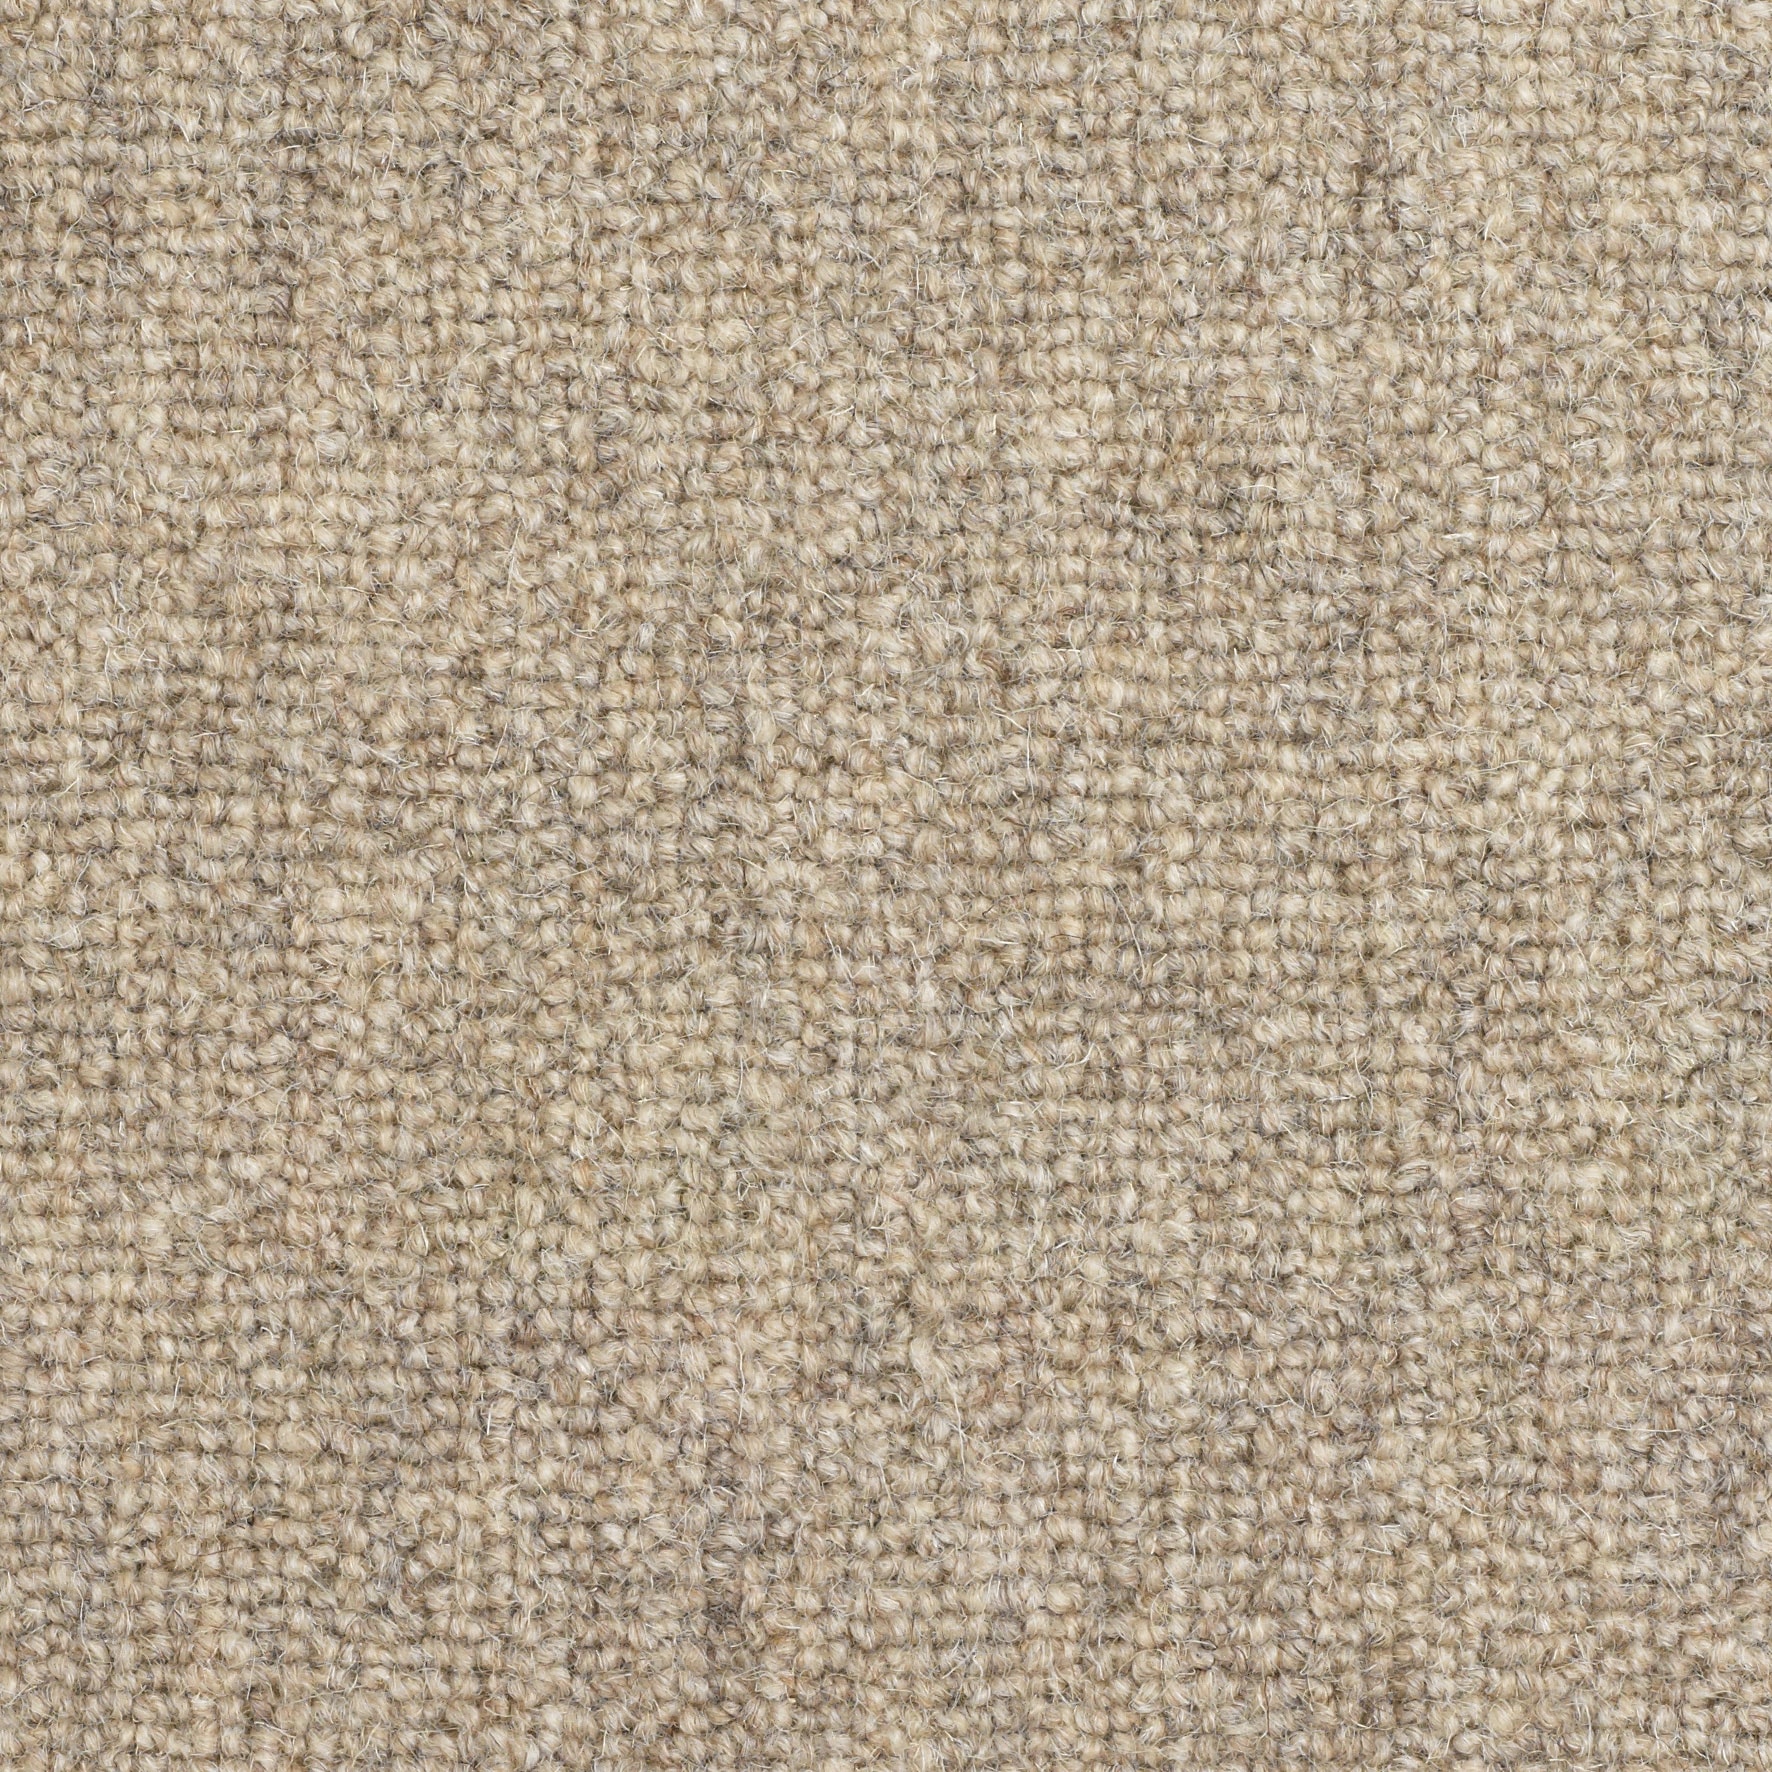 Mountain: Moon Rock - 100% Wool Carpet